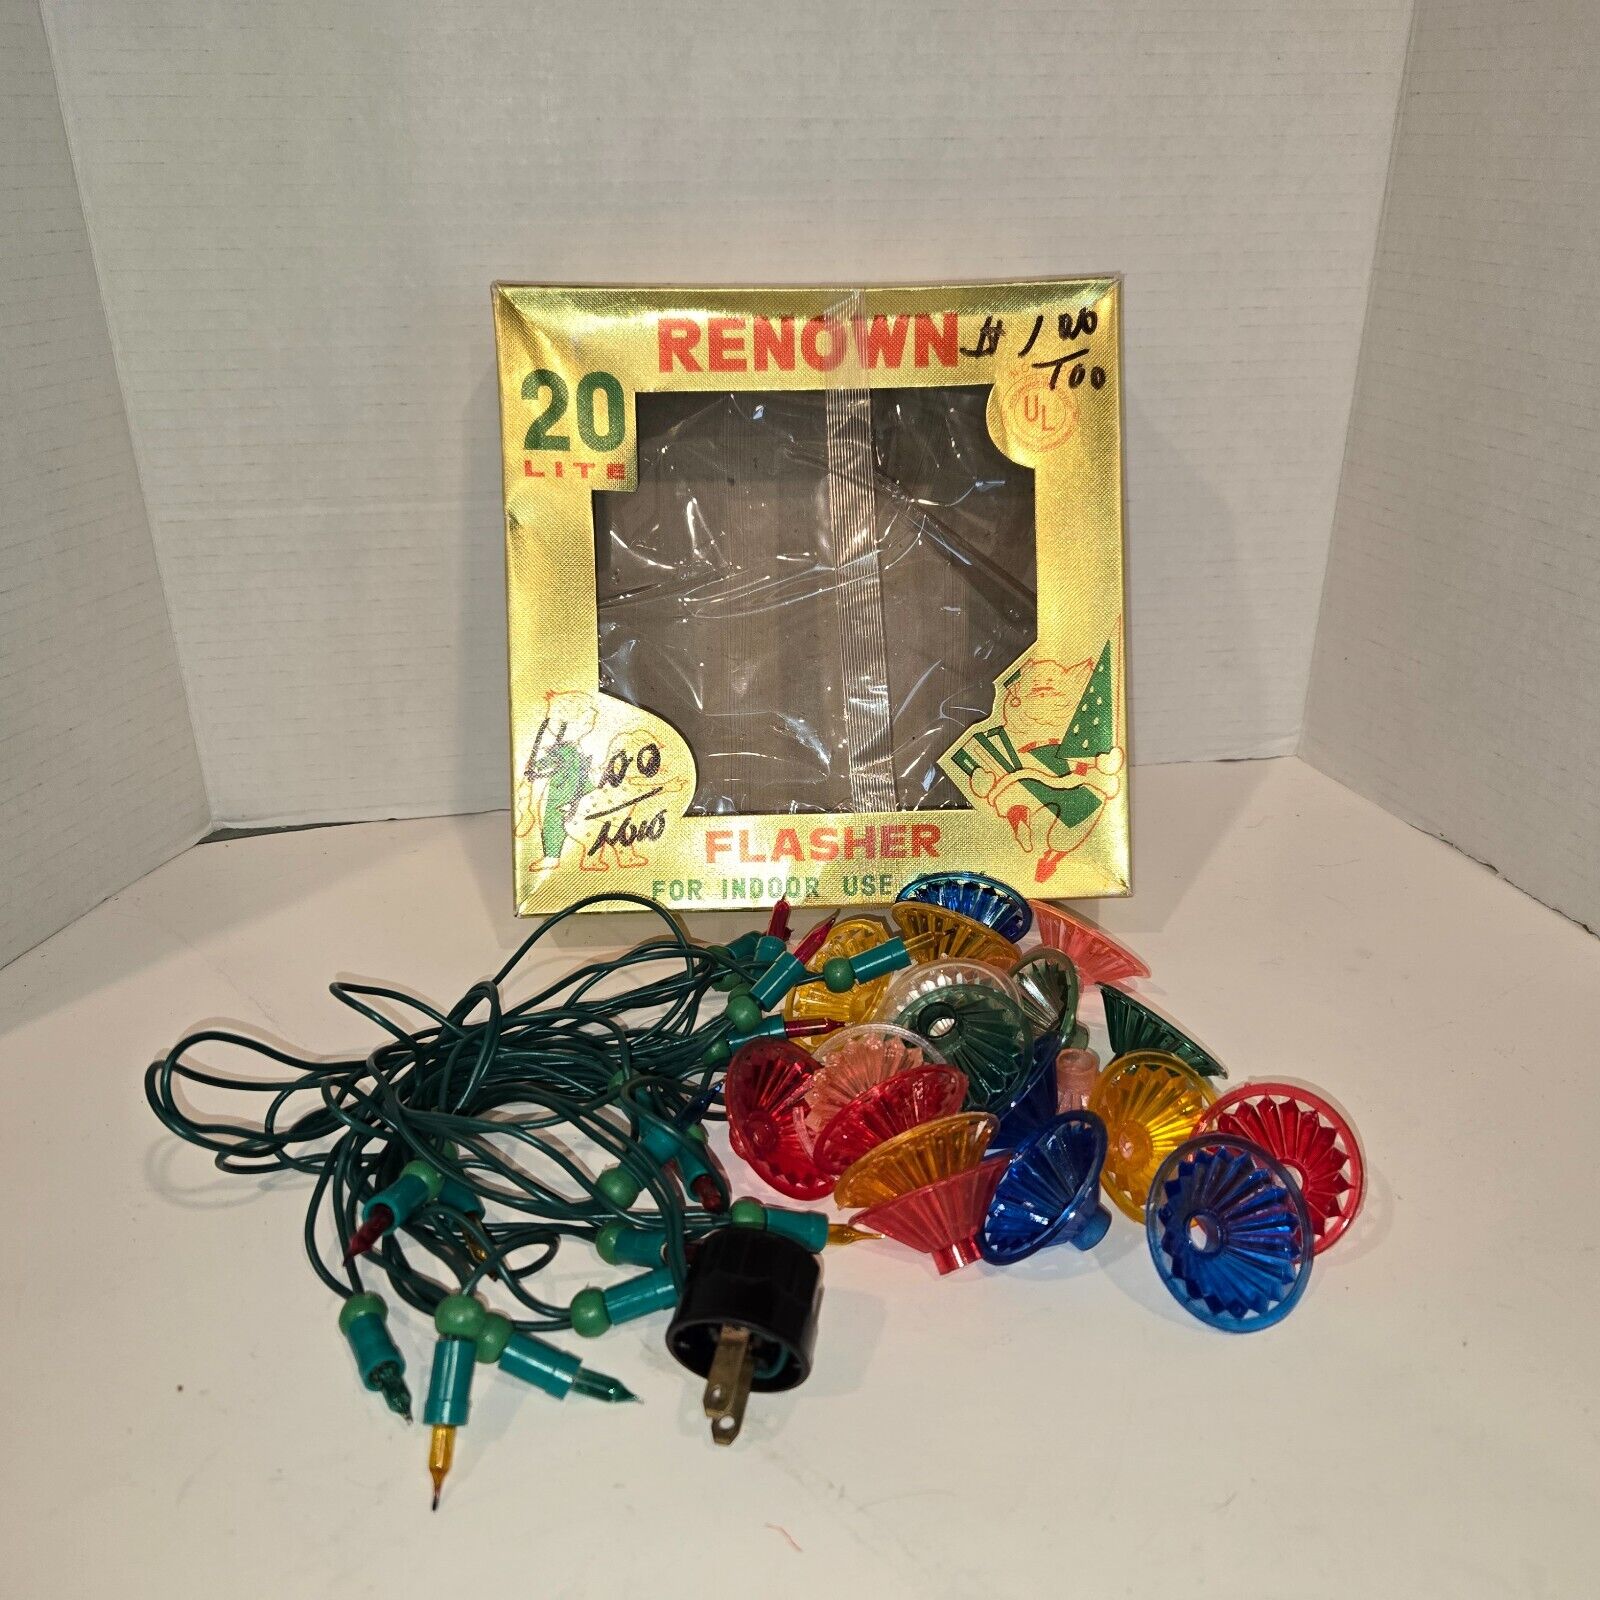 Vintage Renown Plastic Christmas Light Reflectors Lot w/20 Lite Cord (No Work)